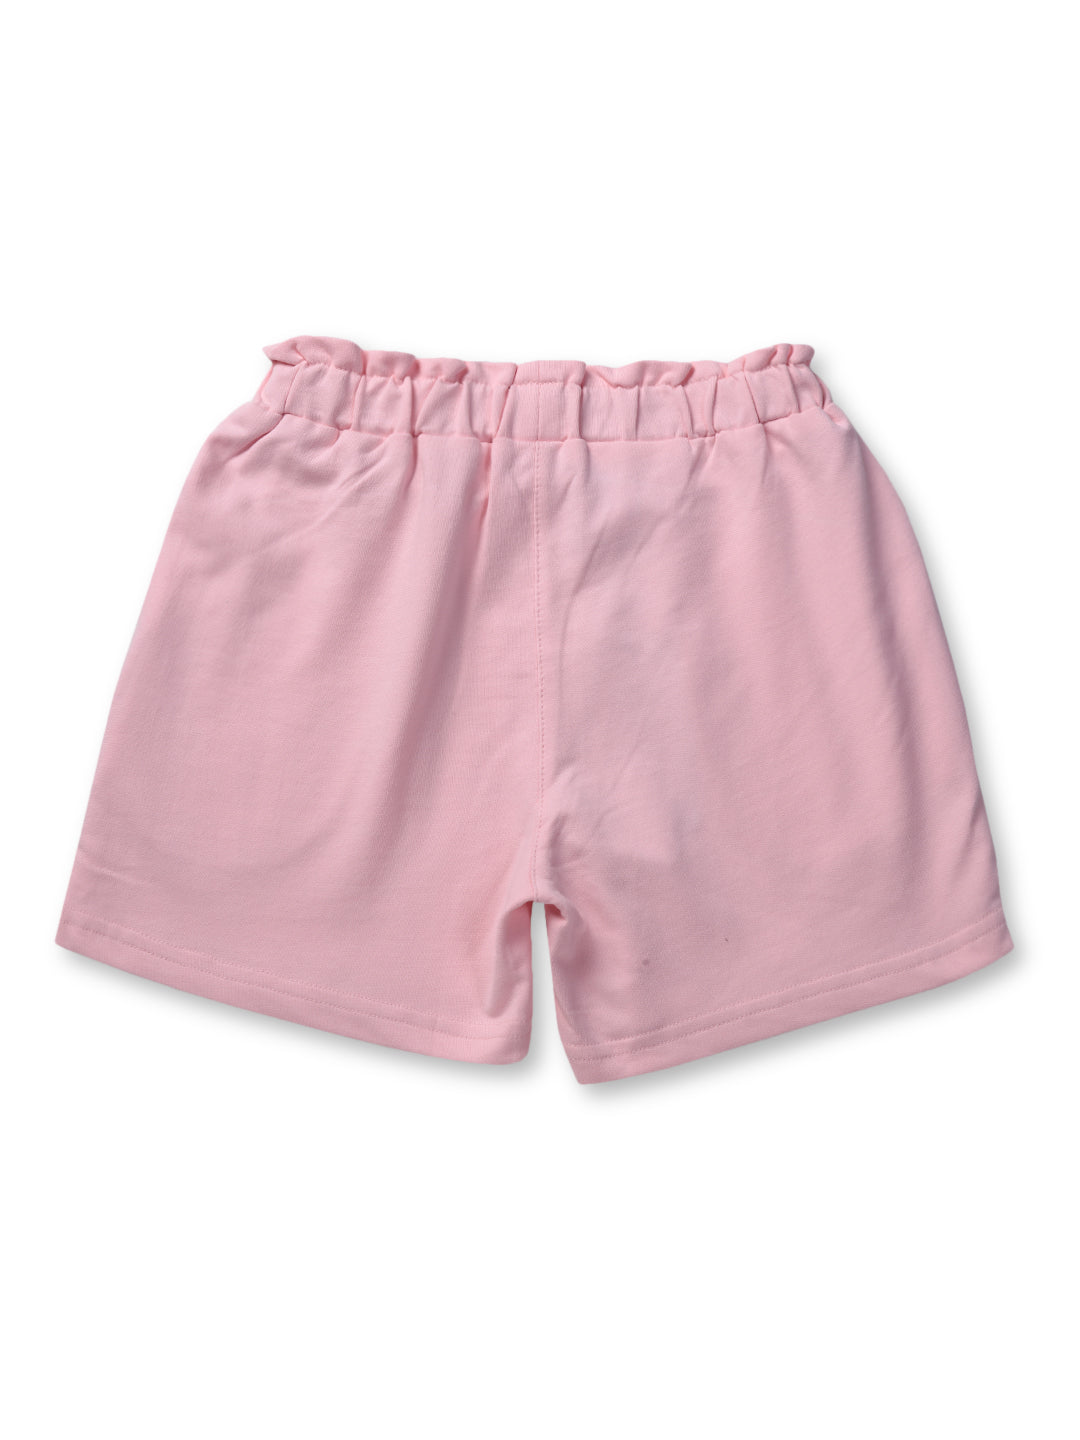 Girls Pink Solid Knits Shorts